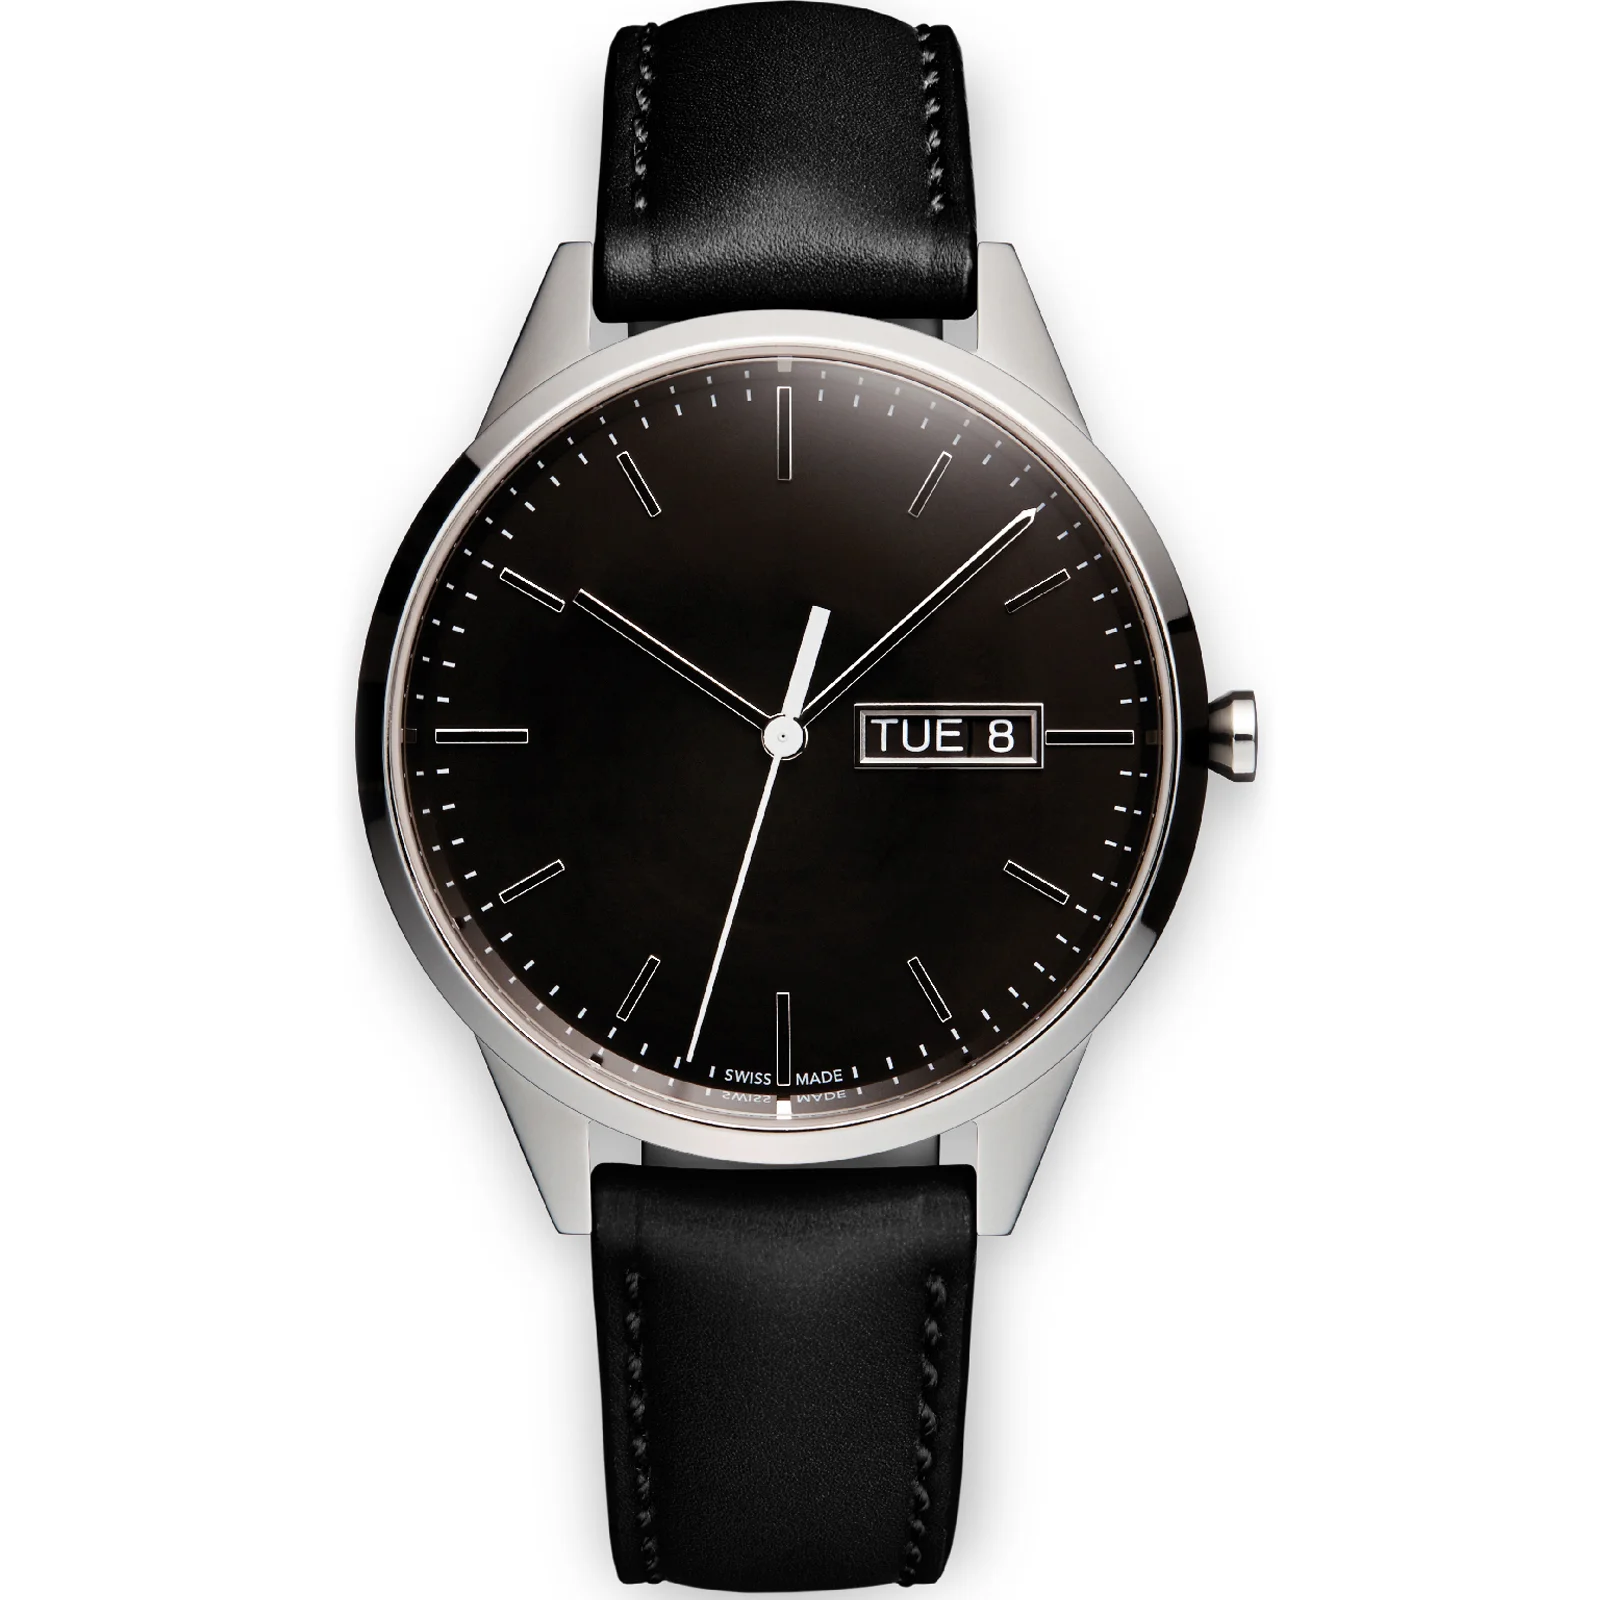 Uniform Wares Men's C40 Polished Steel Italian Nappa Leather Wristwatch - Black Image 1